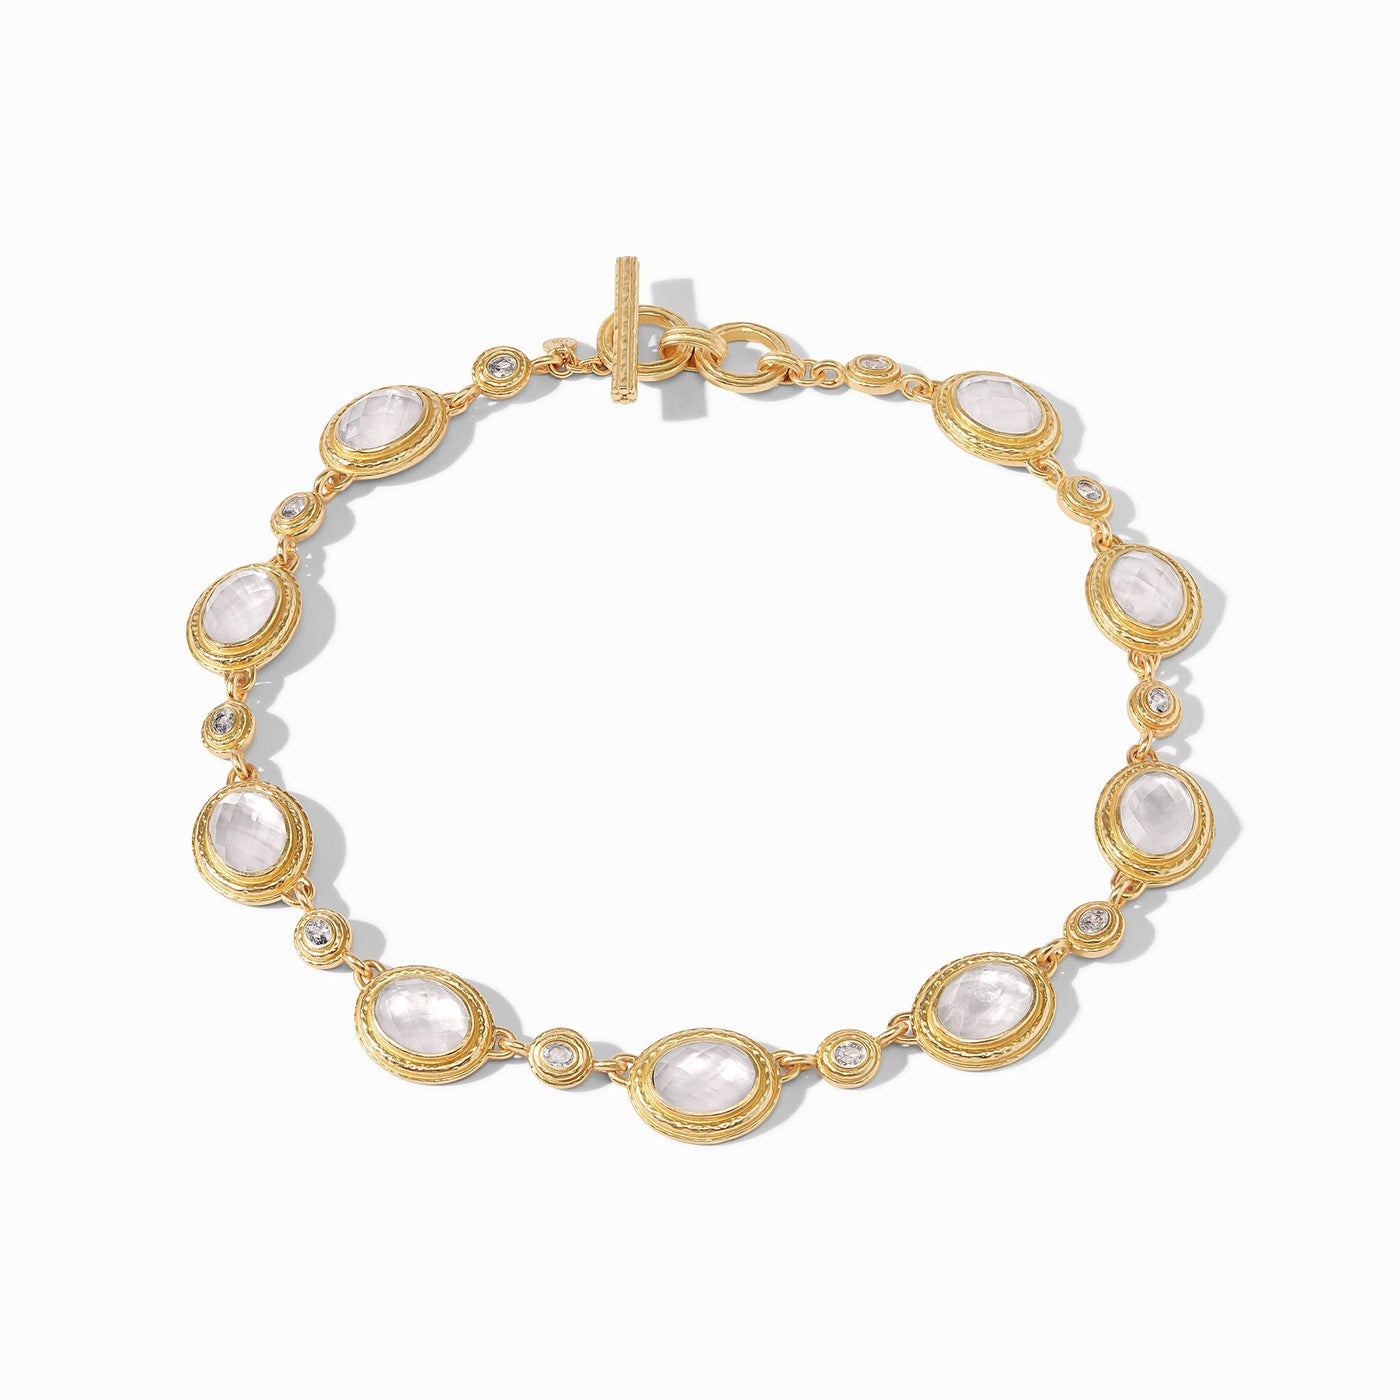 Tudor Stone Necklace - Iridescent Multi Stone